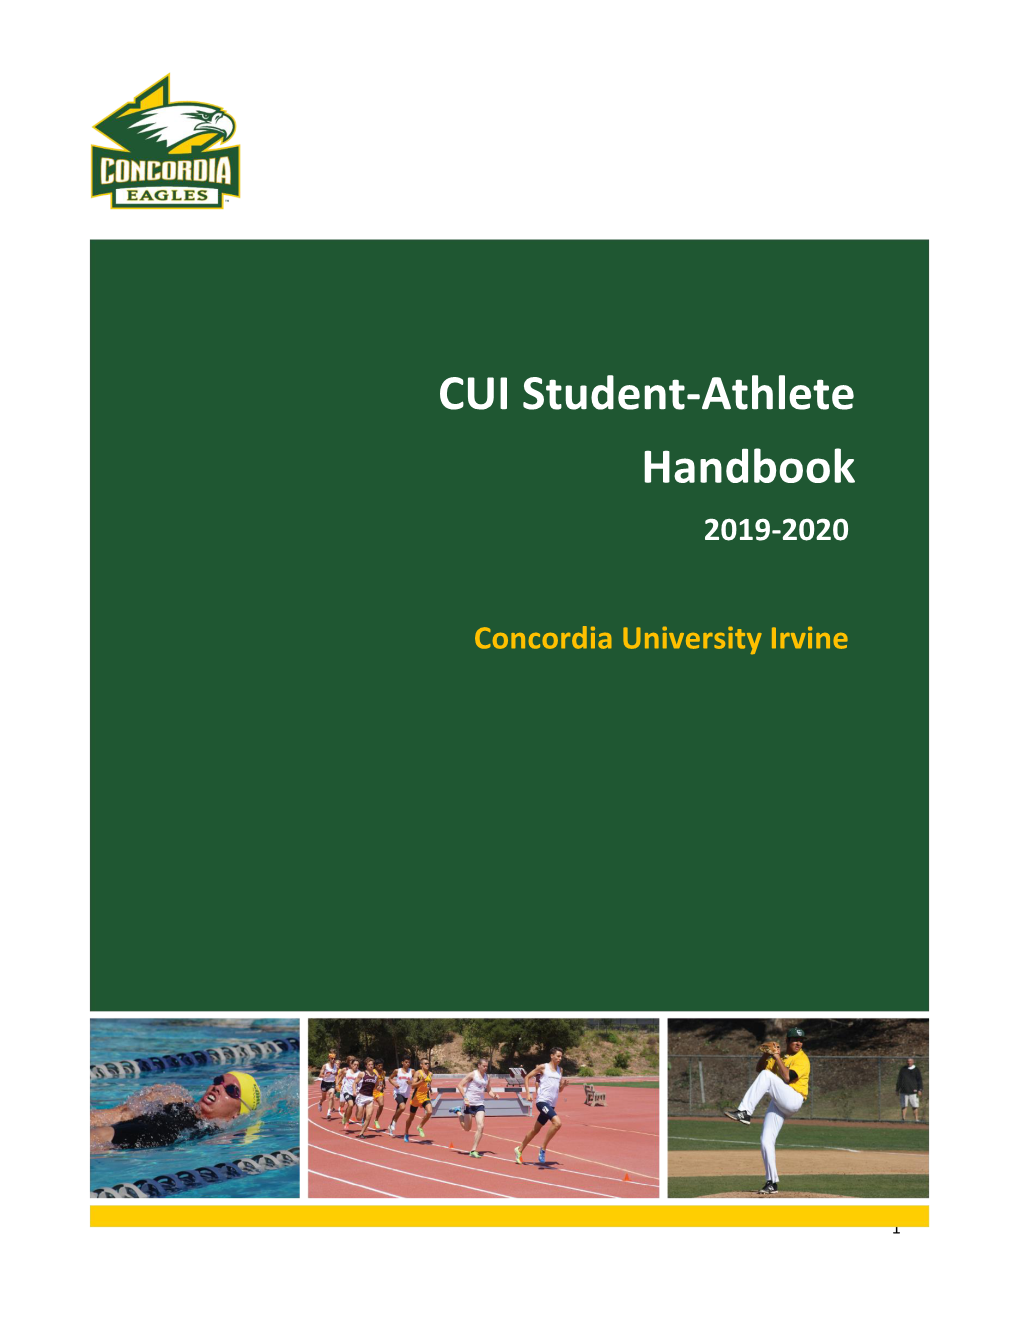 CUI Student-Athlete Handbook 2019-2020